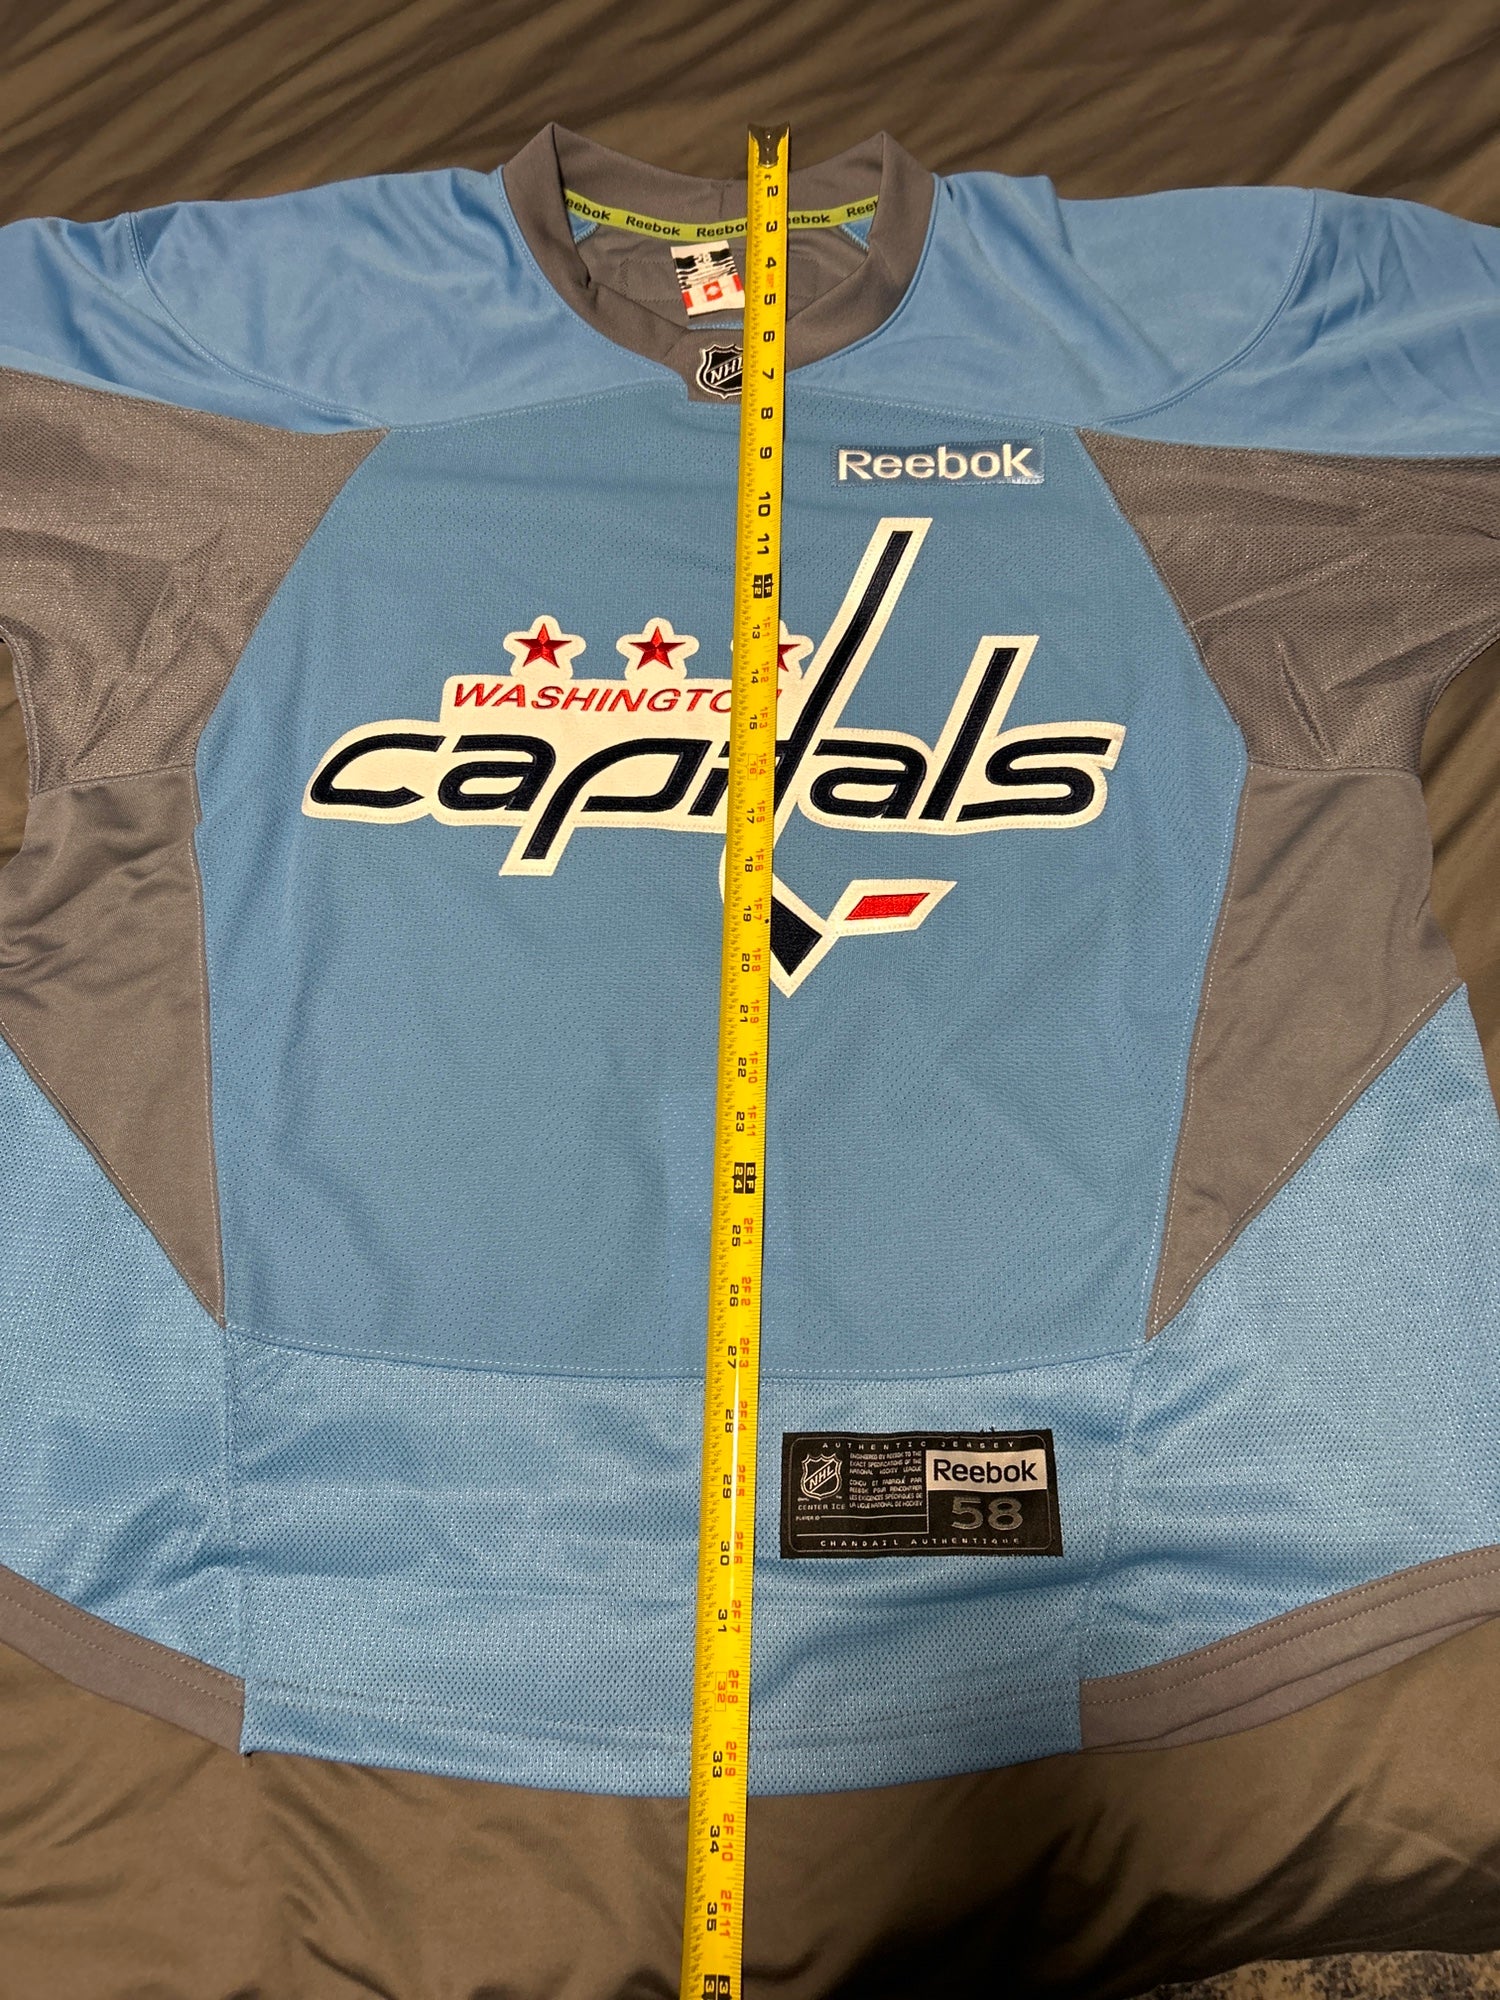 Reebok Washington Capitals Shirt NHL Fan Apparel & Souvenirs for sale